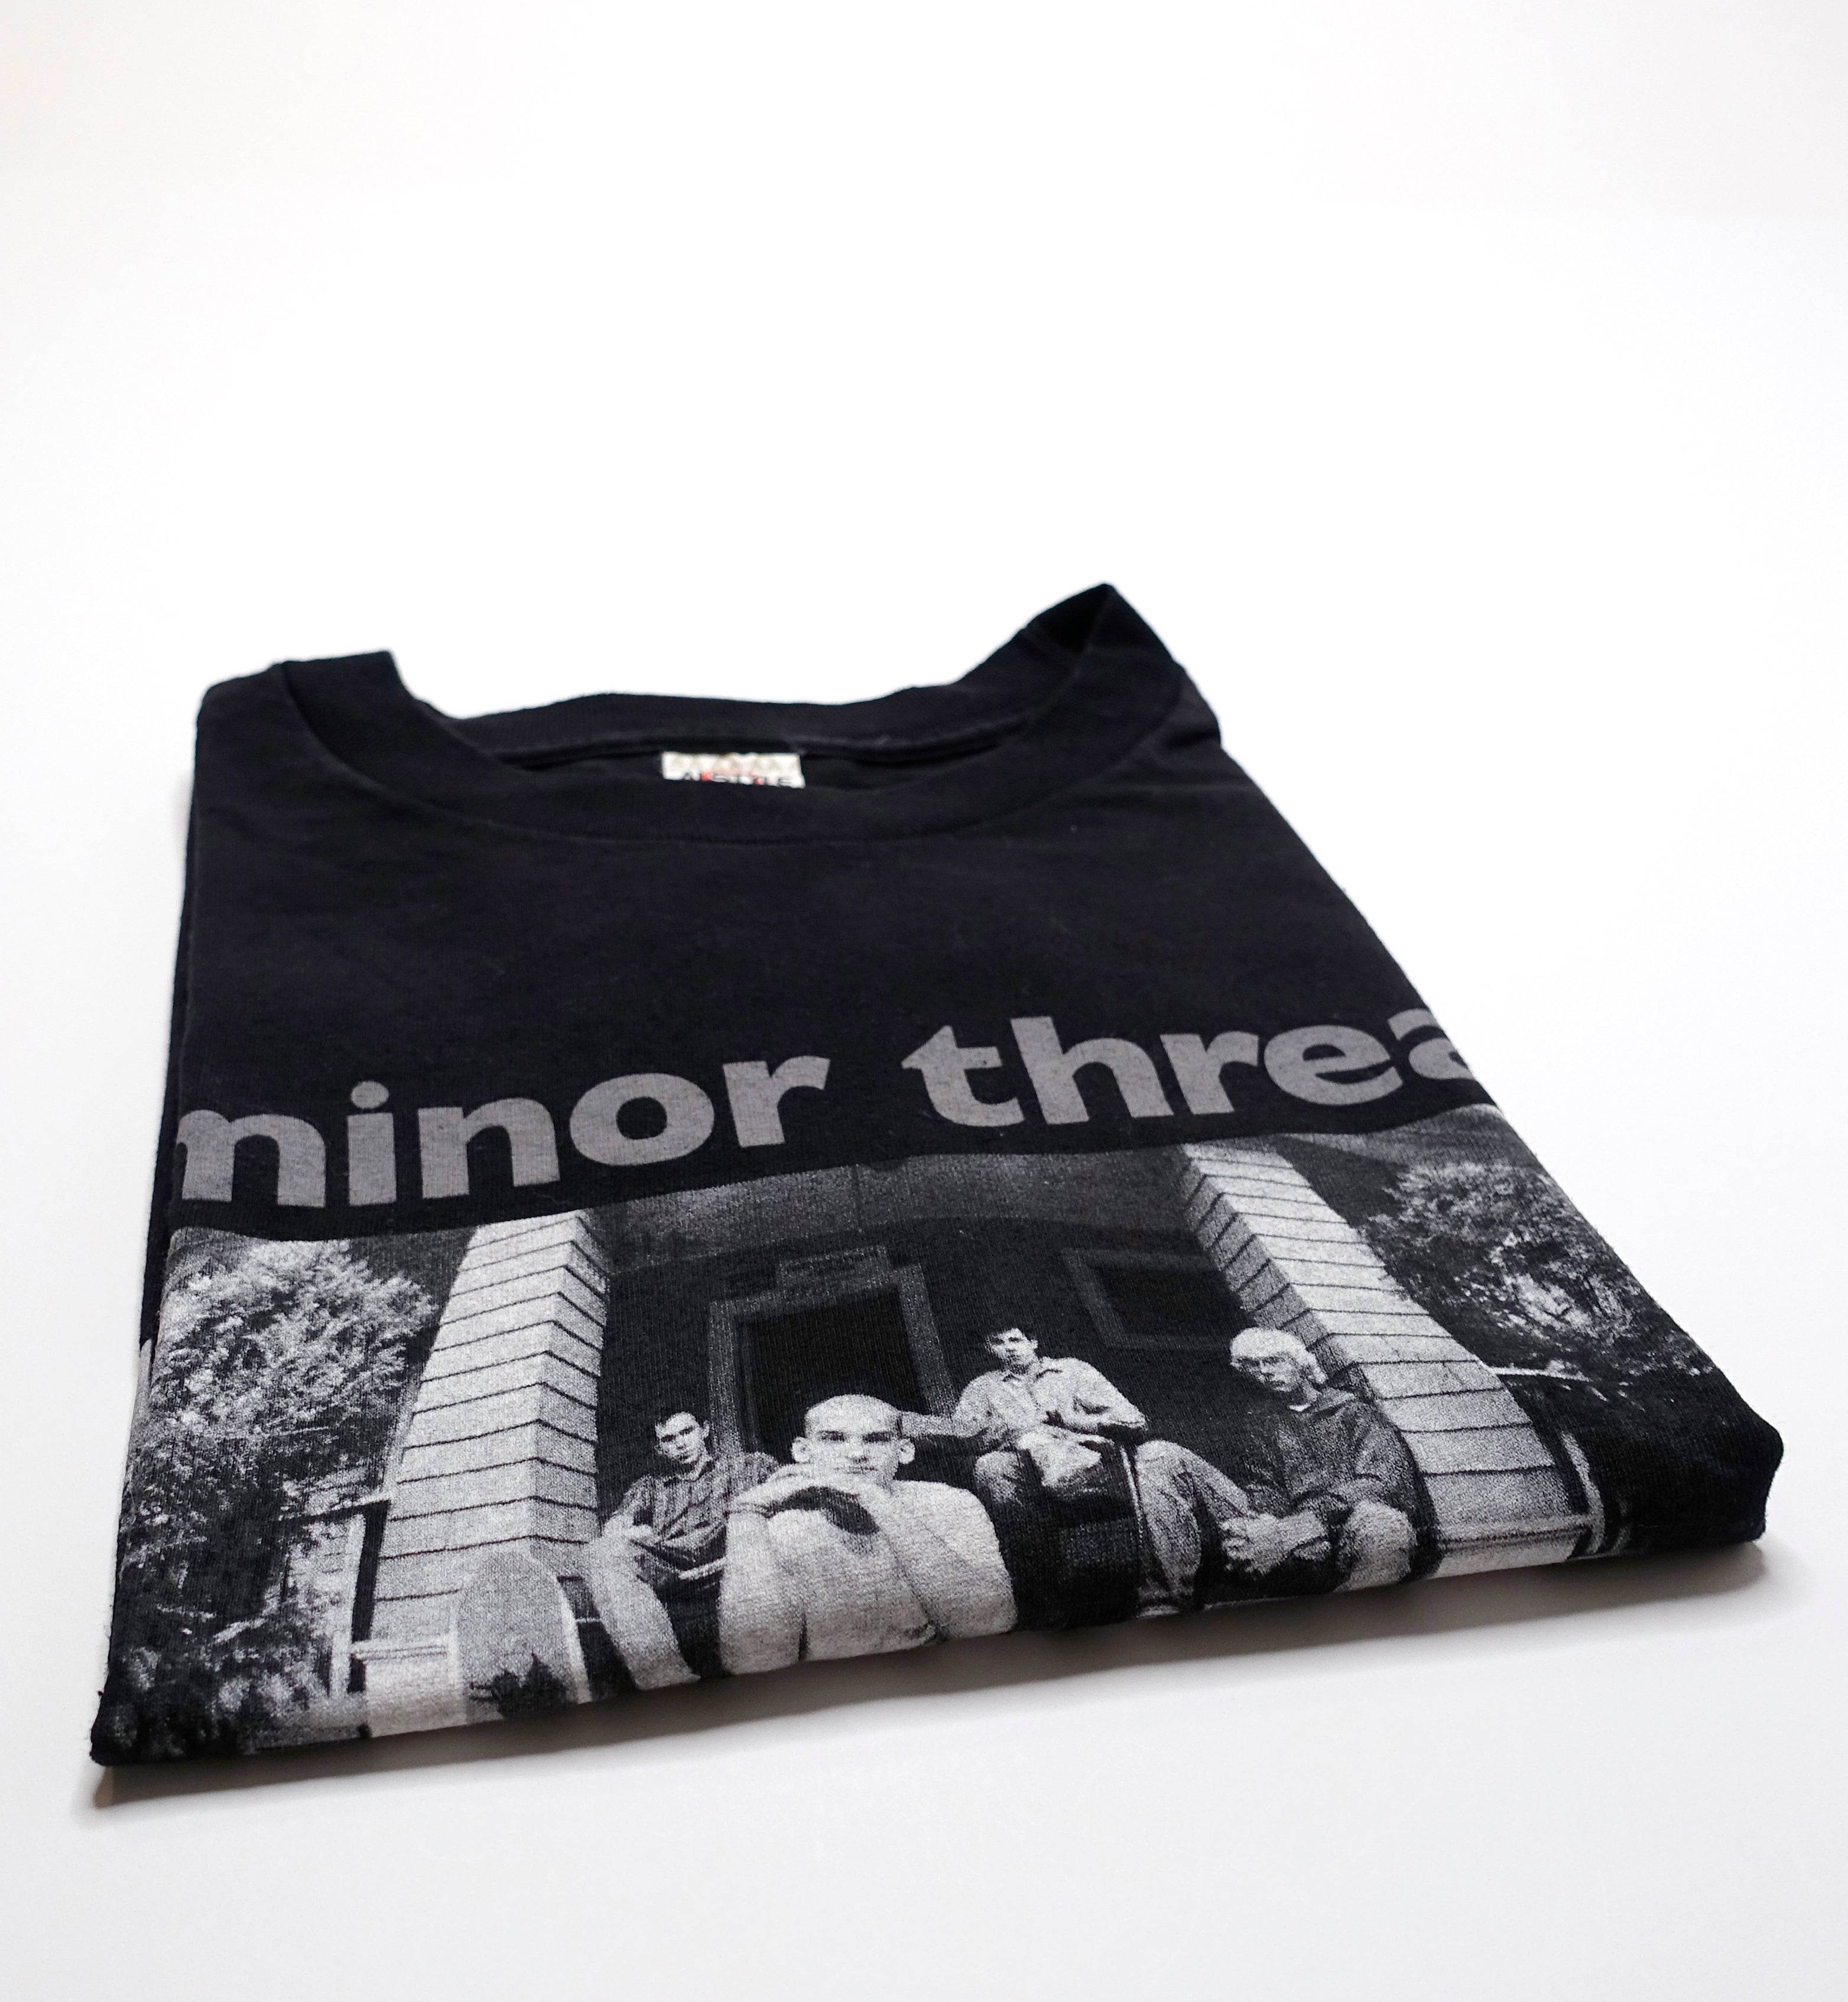 Minor Threat - Salad Days Shirt Size Large (00's Version)